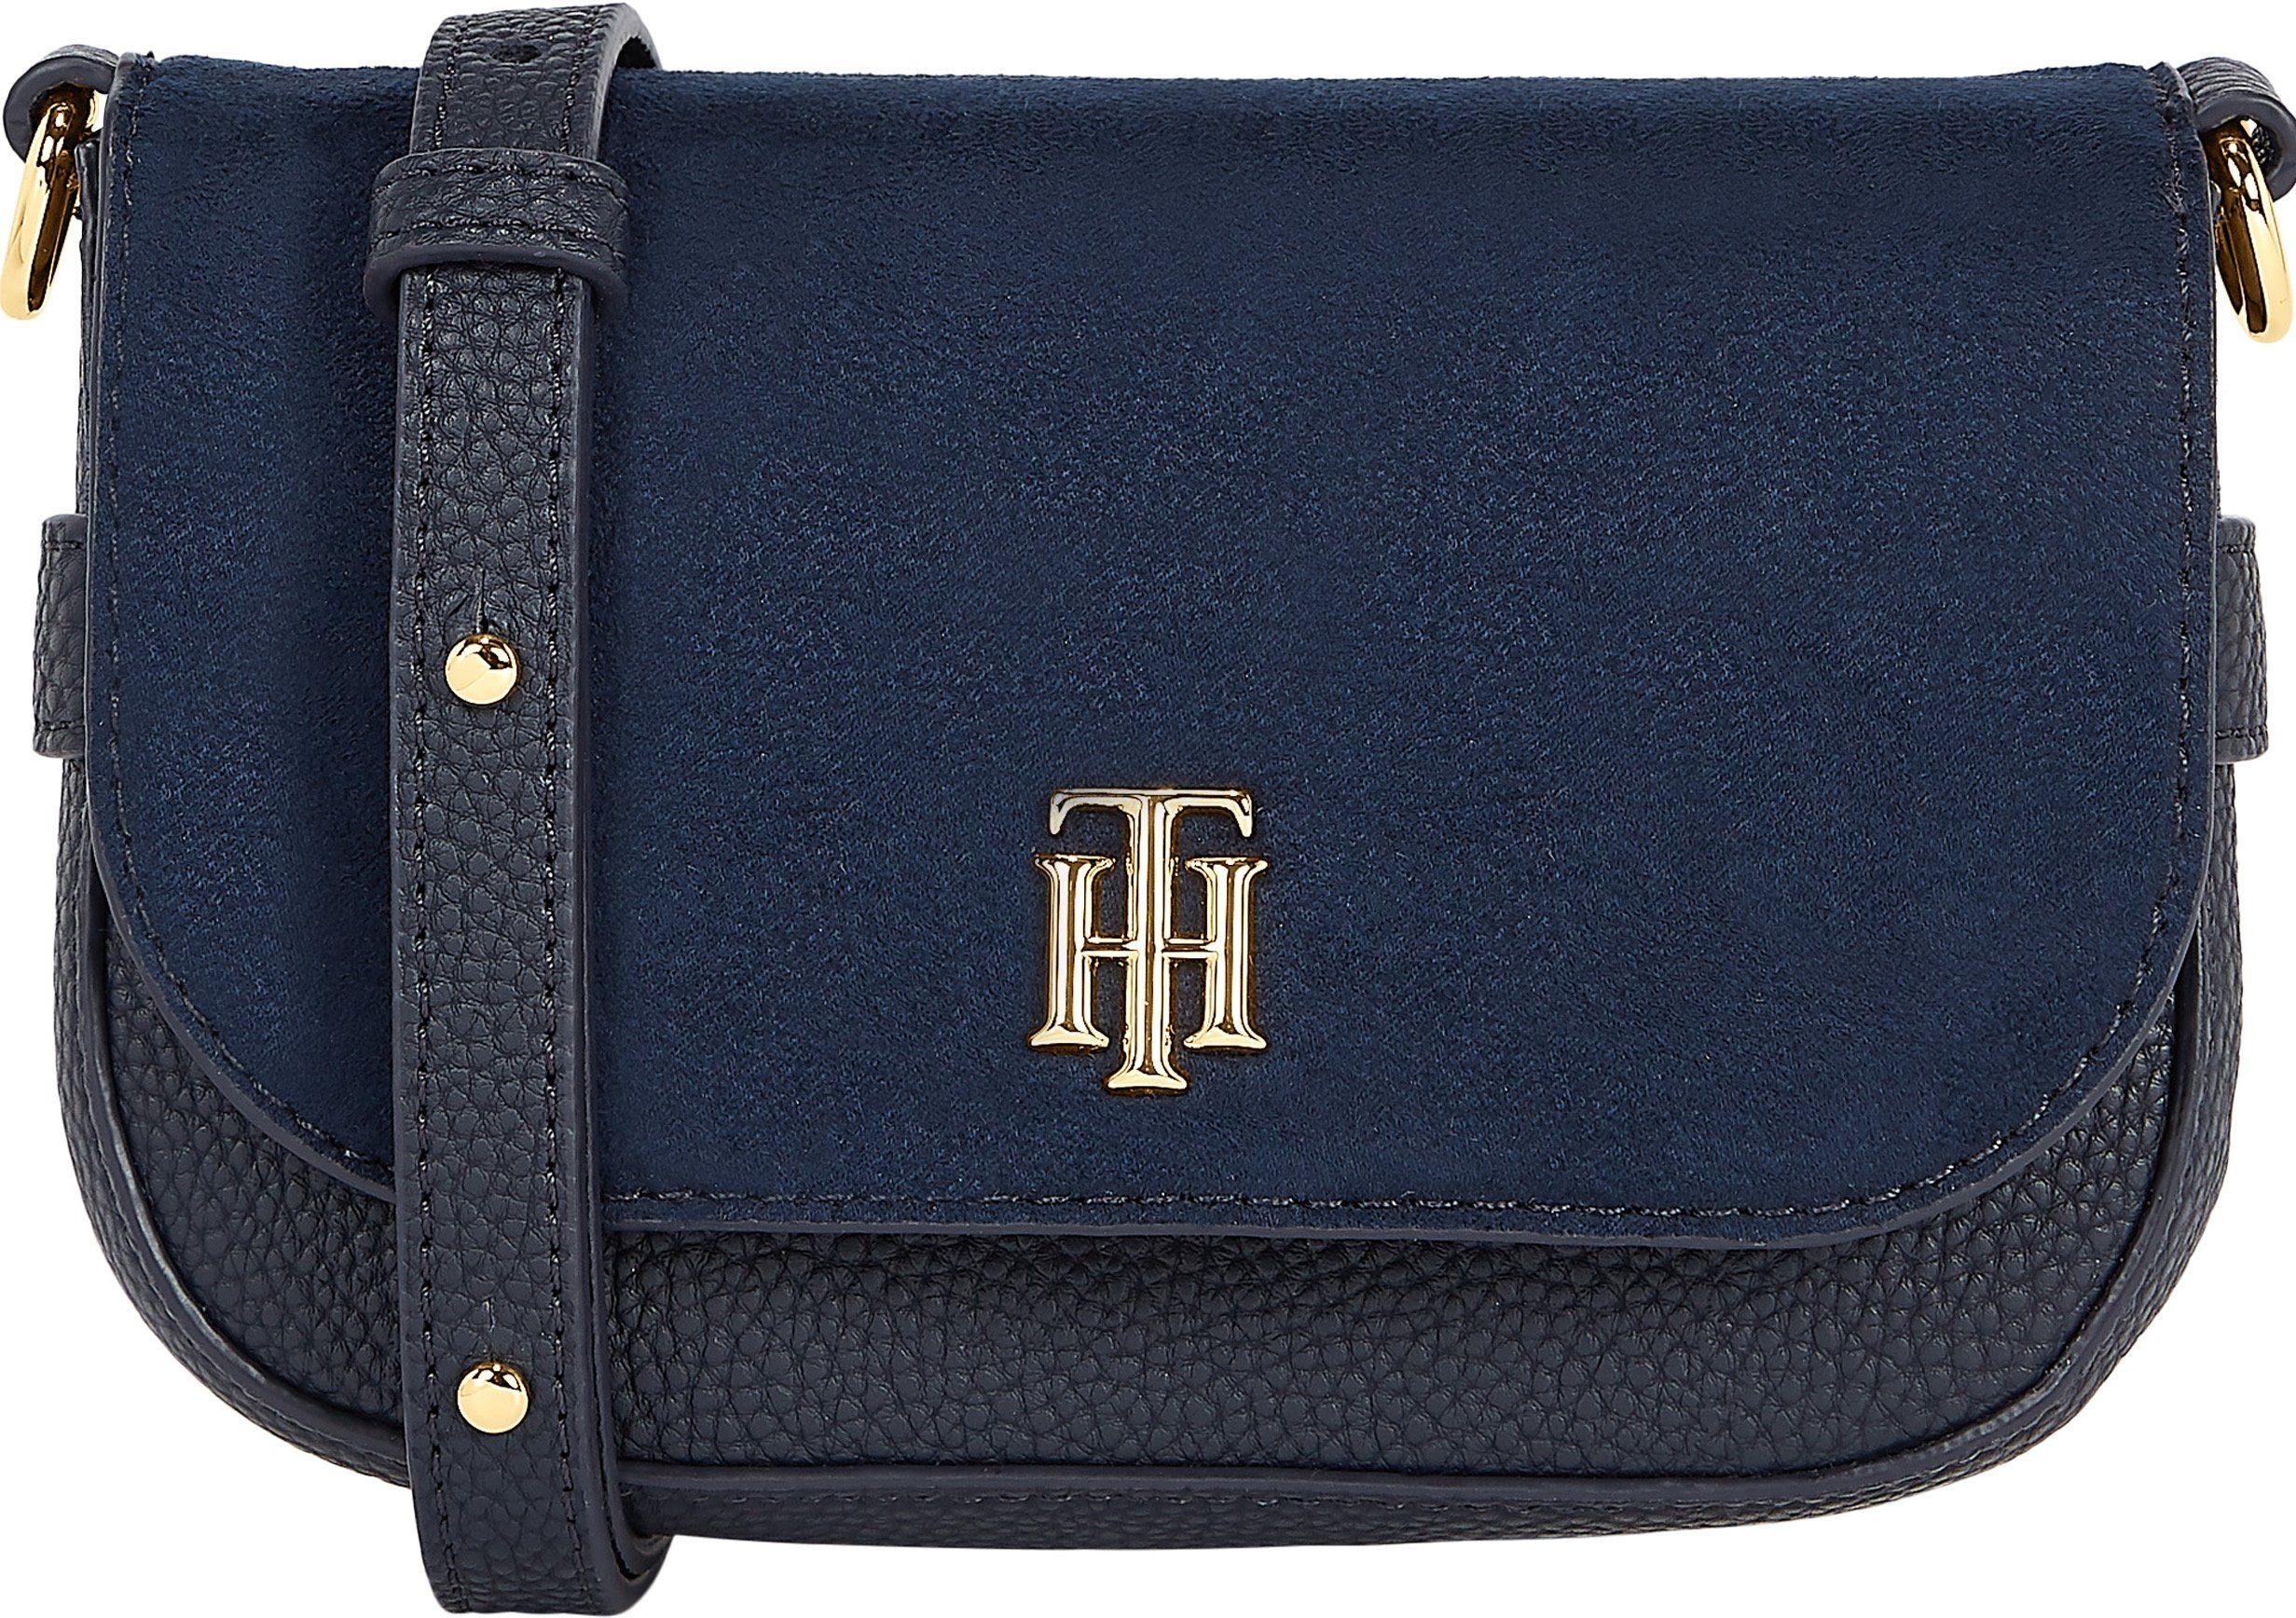 Tommy Hilfiger Mini Bag »TH JOY MINI CROSSOVER MIX«, mit goldfarbenen  Details online kaufen | OTTO